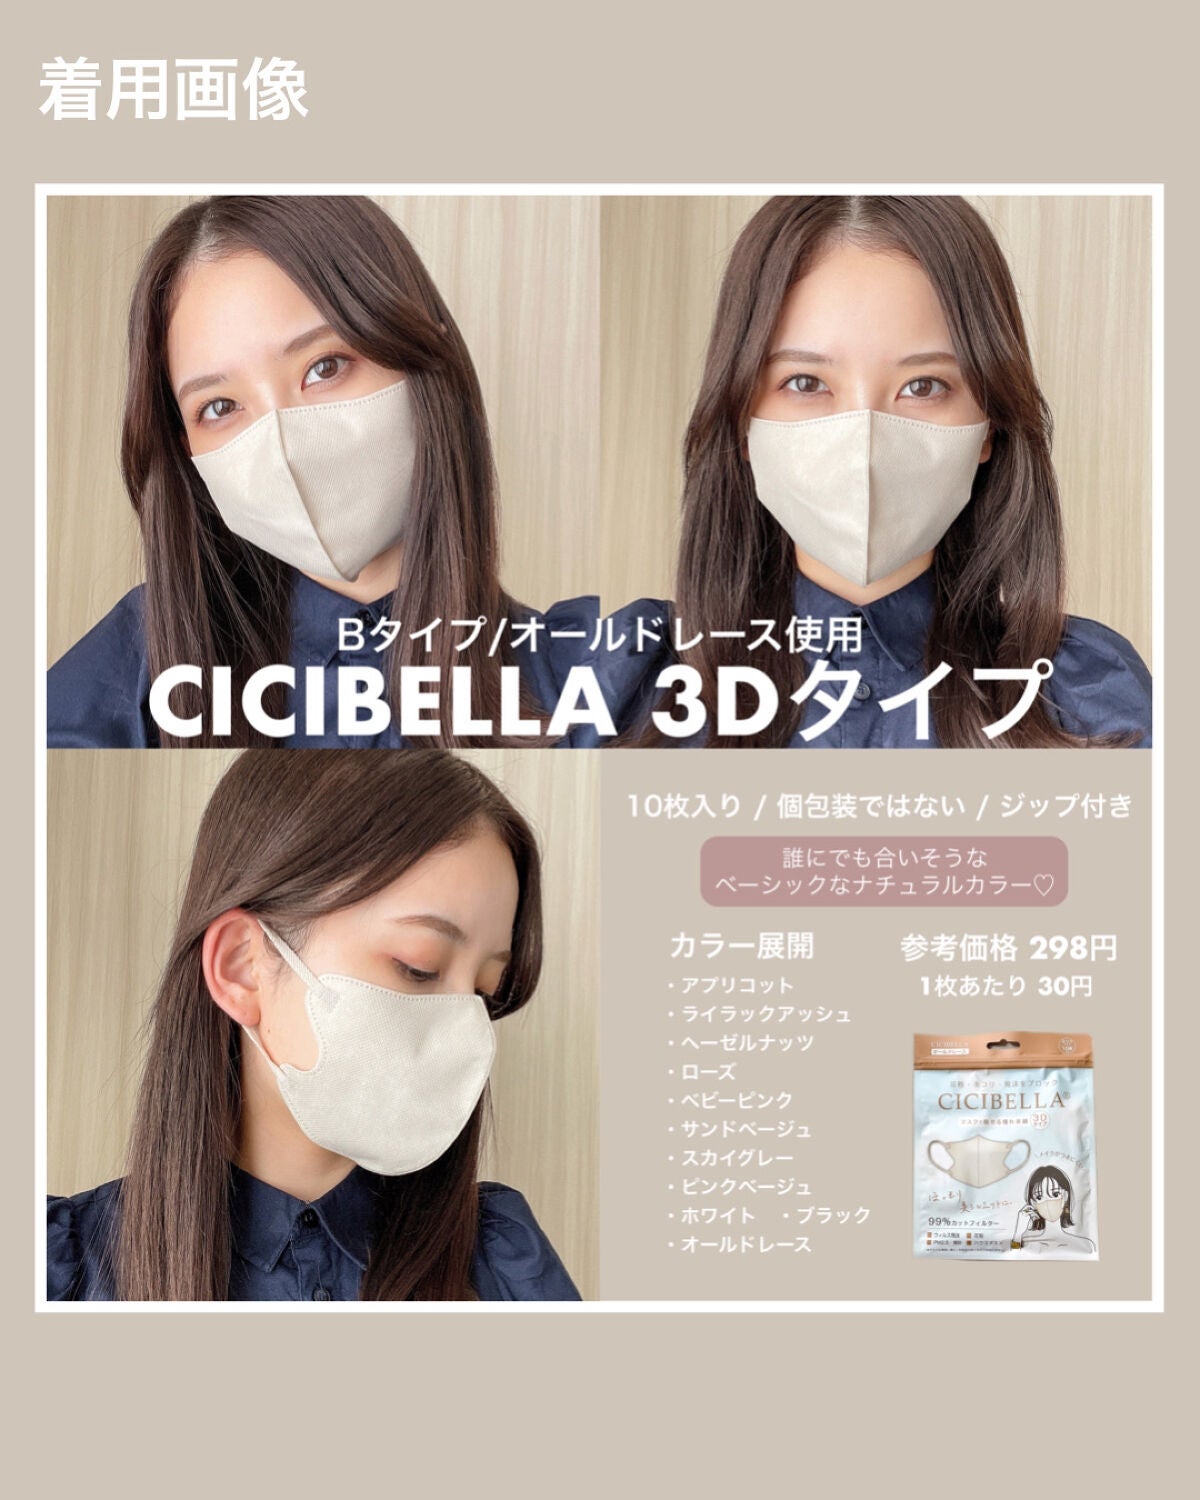 CICIBELLA 3D小顔マスク オードルレース - 衛生医療用品・救急用品